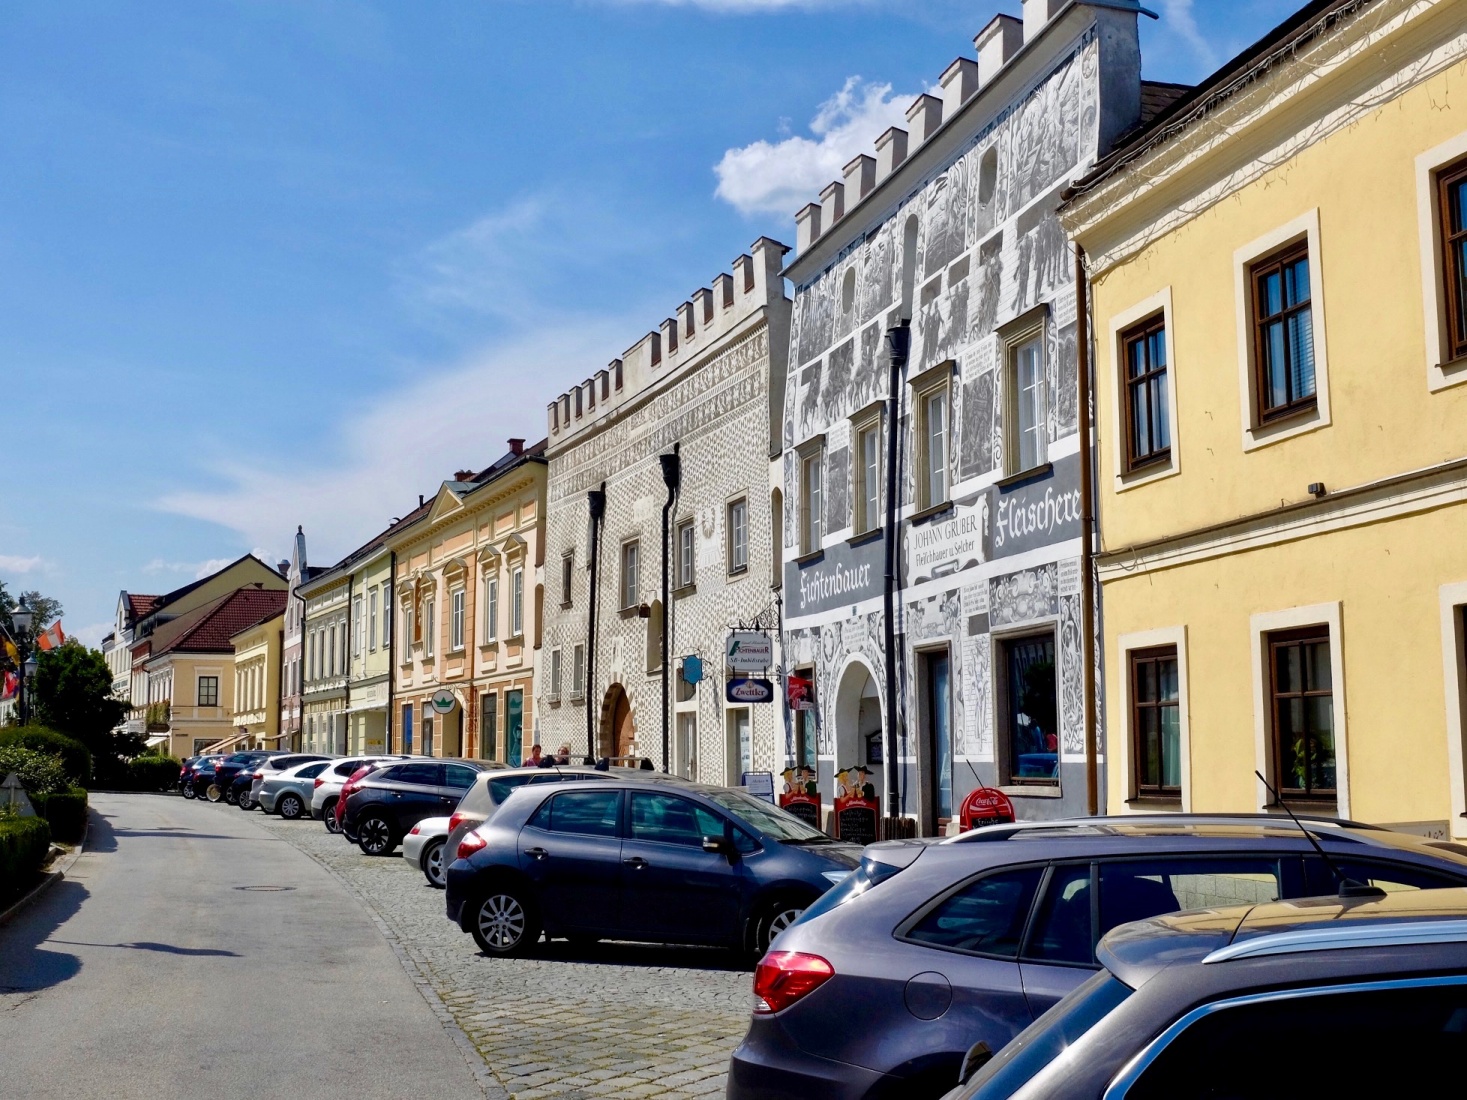 16th century Renaissance buildings line the square in prospering Gmünd, Austria.